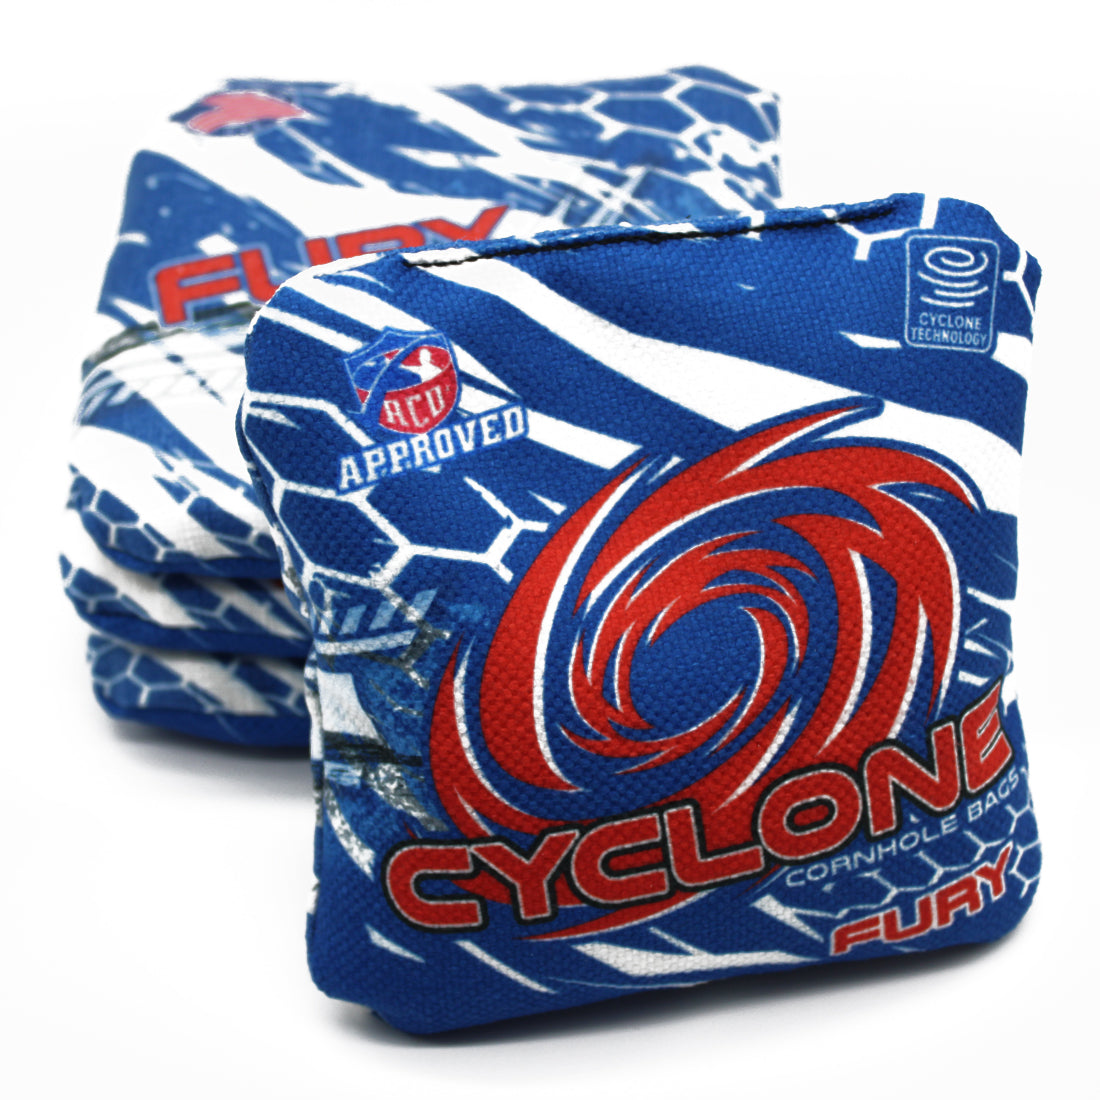 Cyclone Fury Cornhole bags